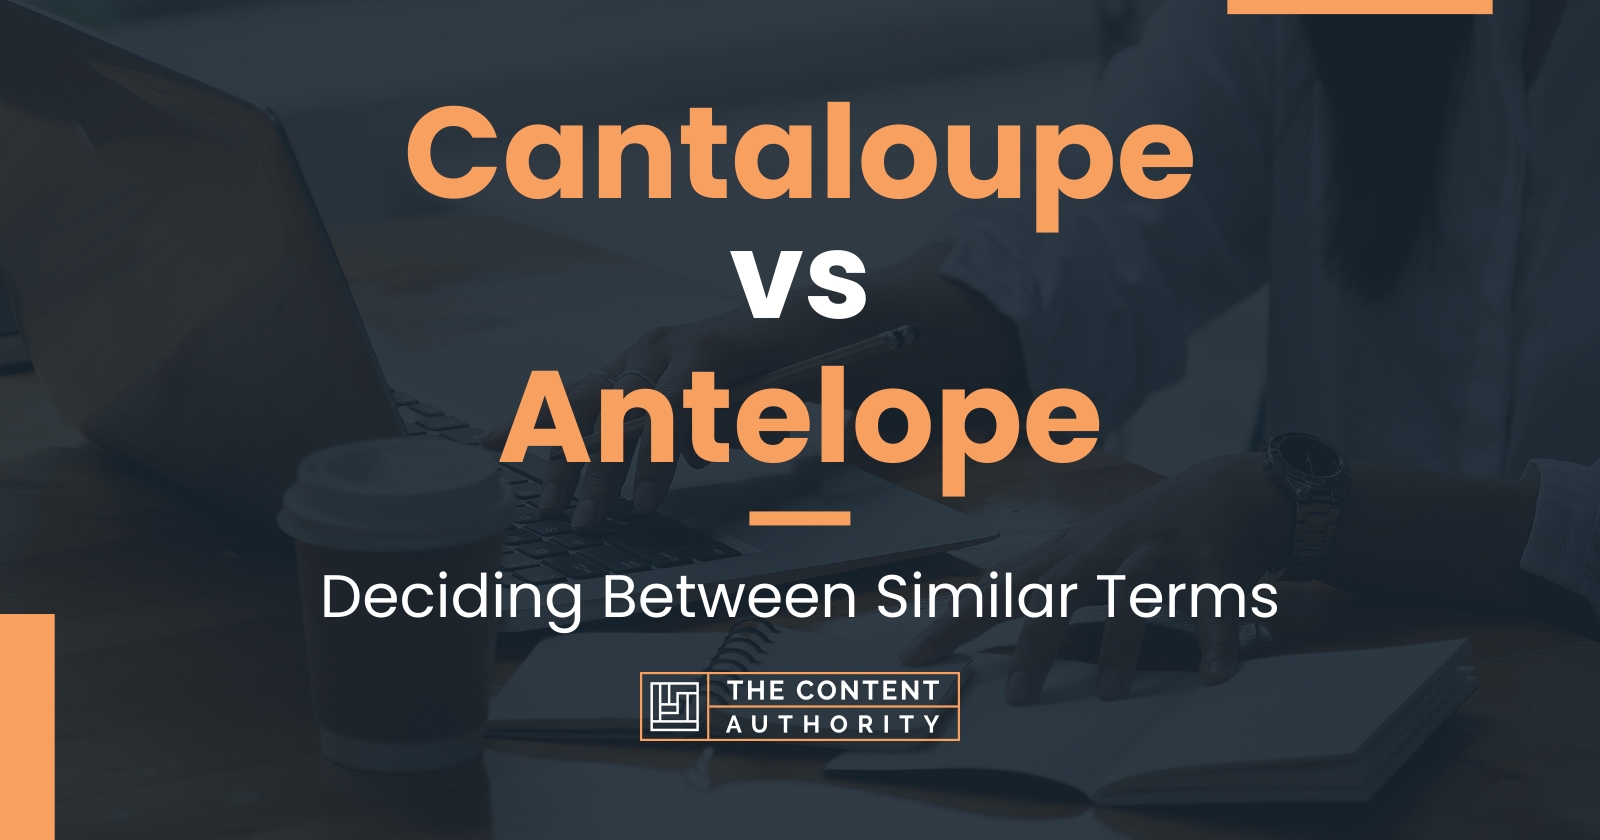 Cantaloupe vs Antelope: Deciding Between Similar Terms